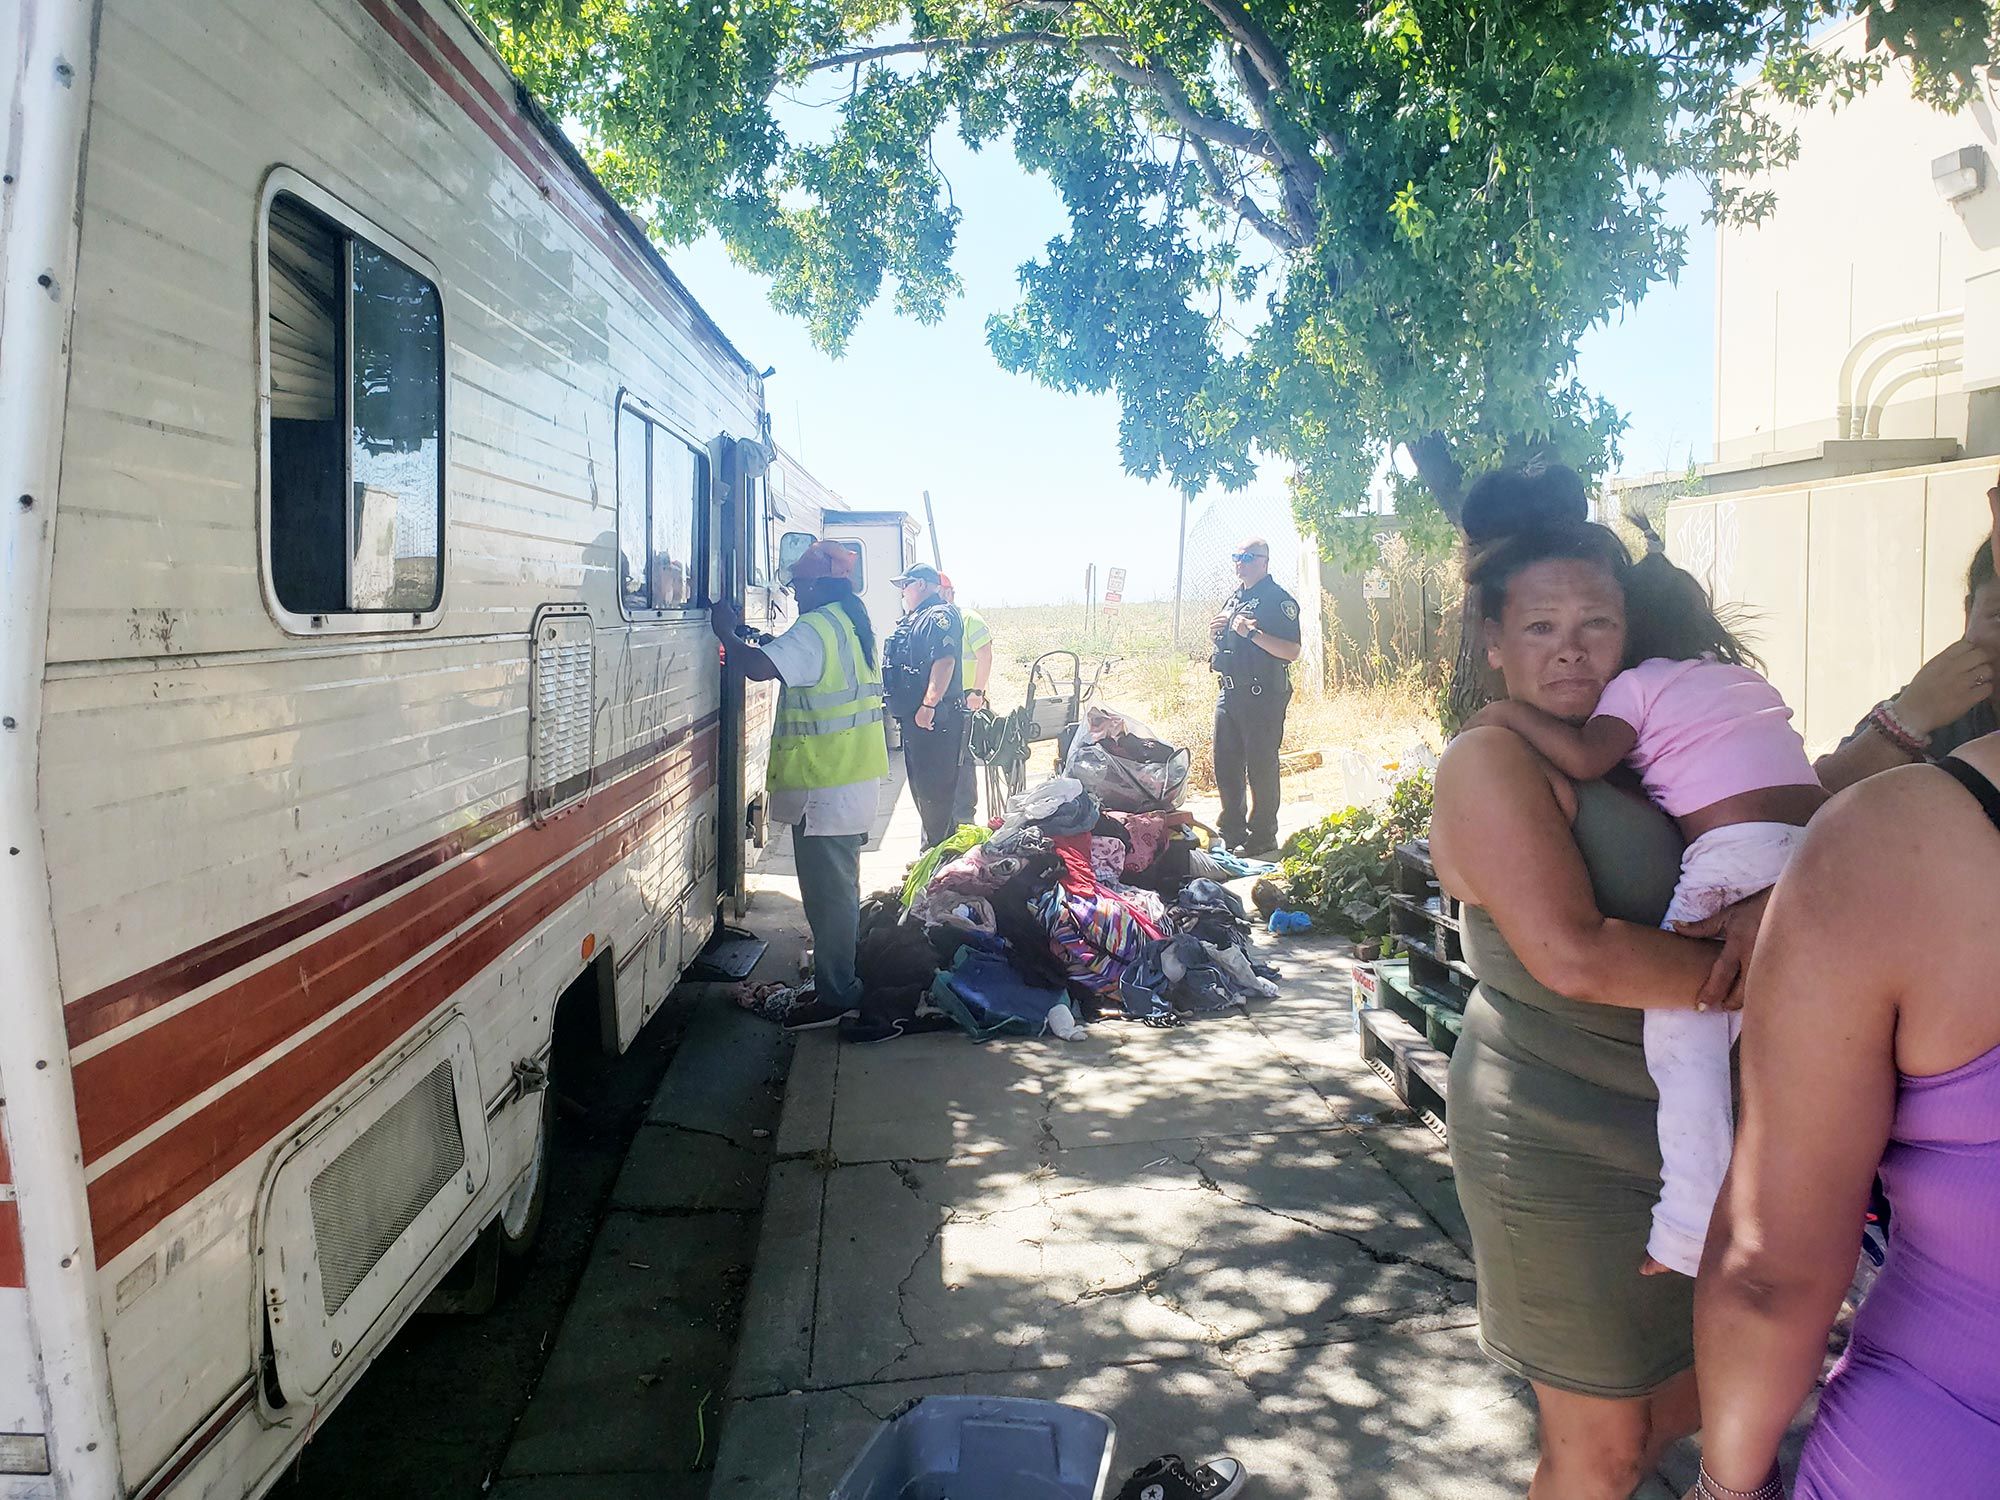 Vallejo tows RV, trailer leaving family on street, arrests activist